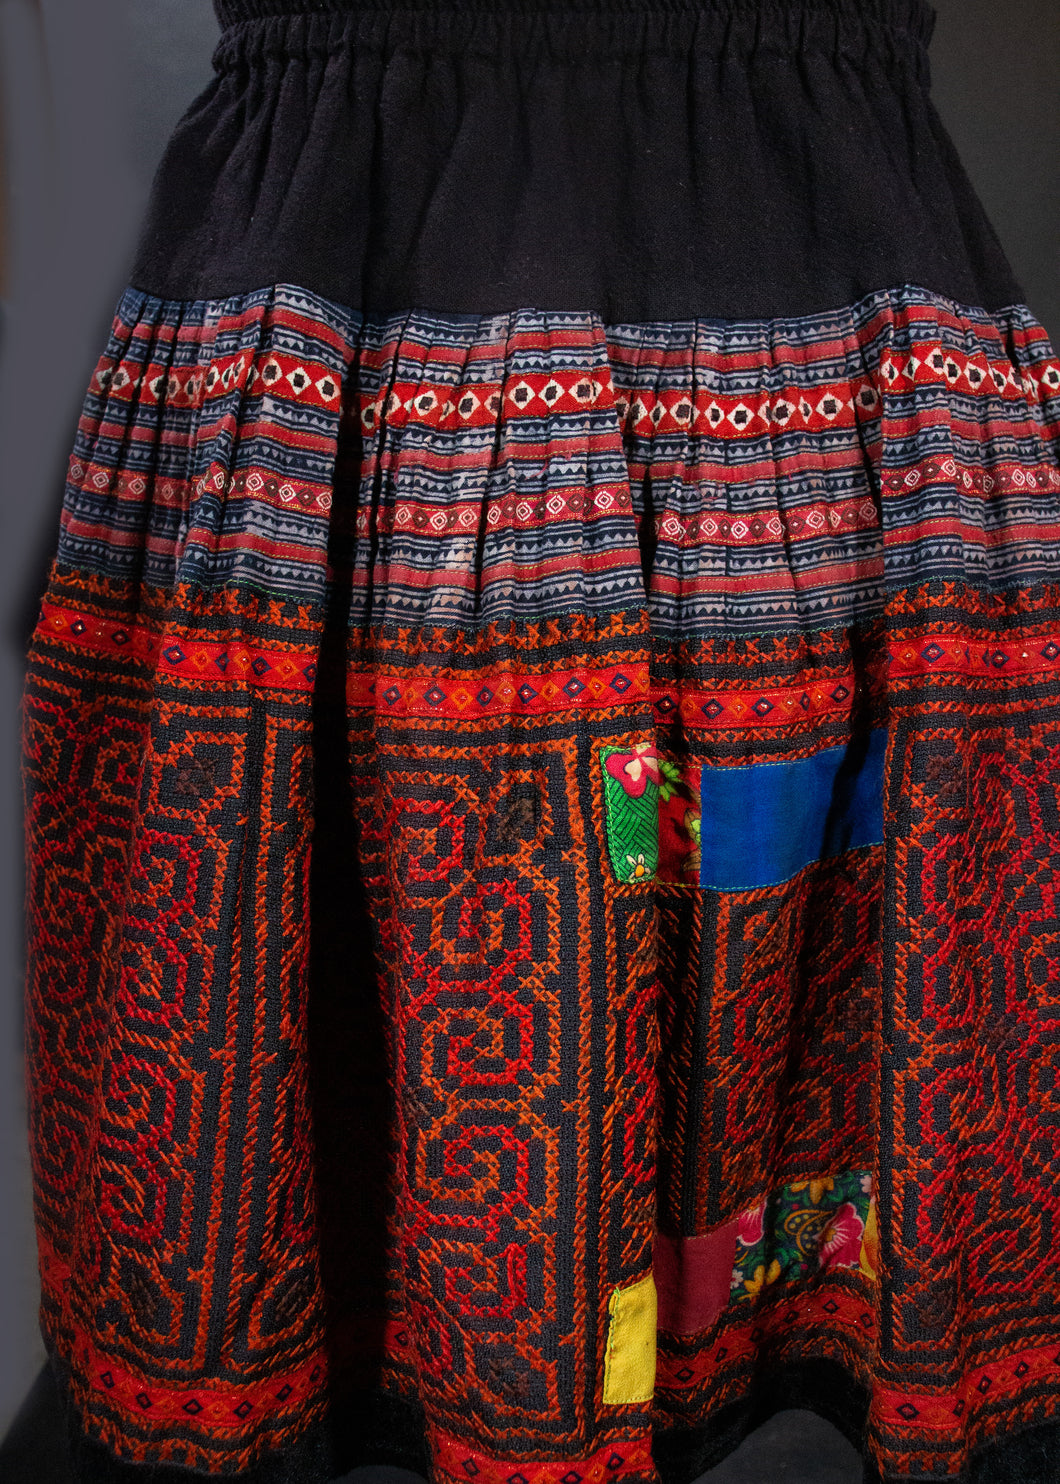 Hmong Style Thai Skirt by Hogo Natsuwa